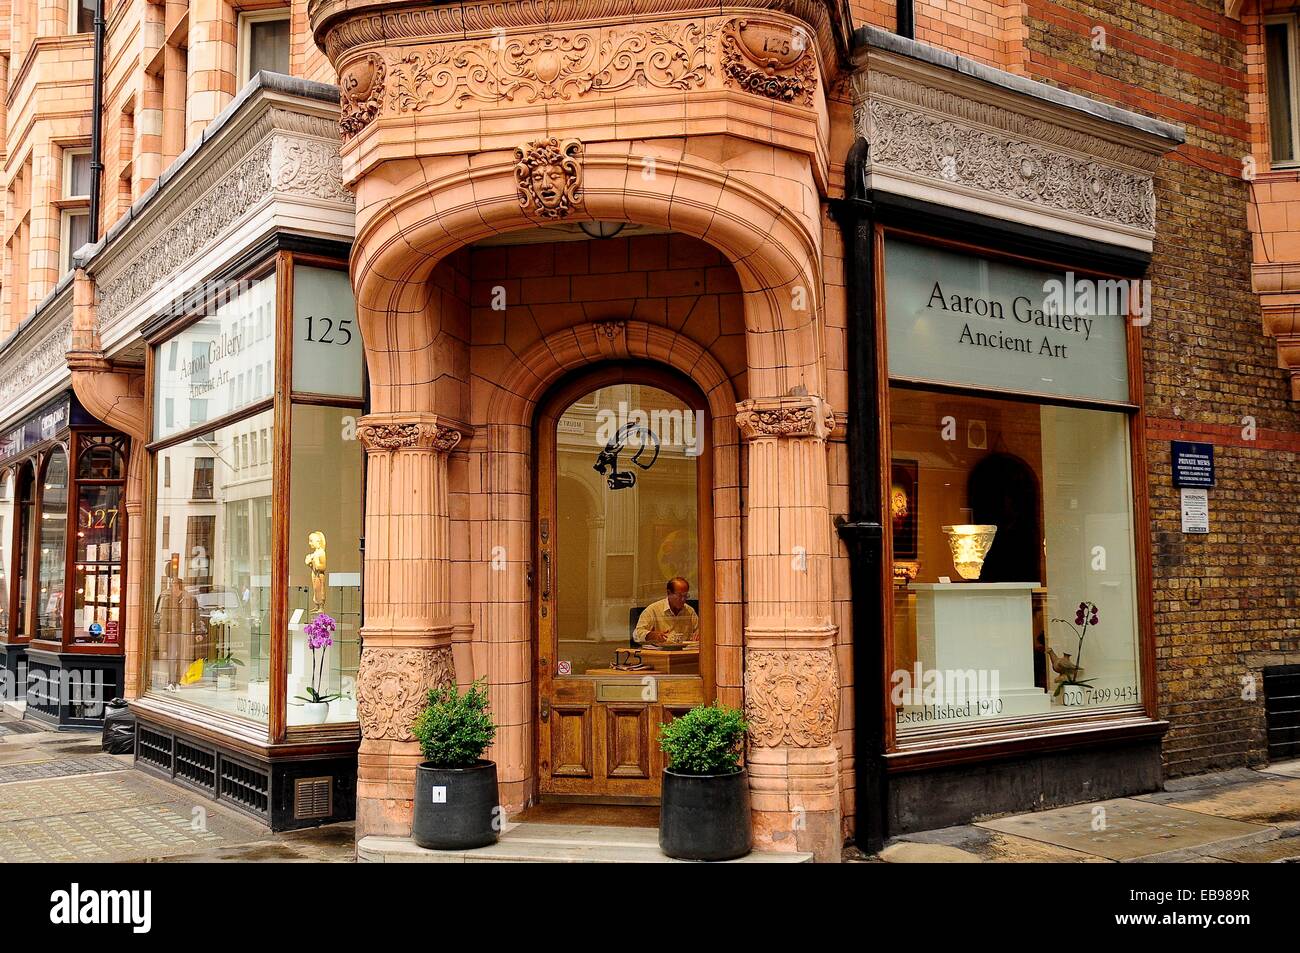 Ancient Art shop in Mayfair, London, England, UK, Europe. Stock Photo